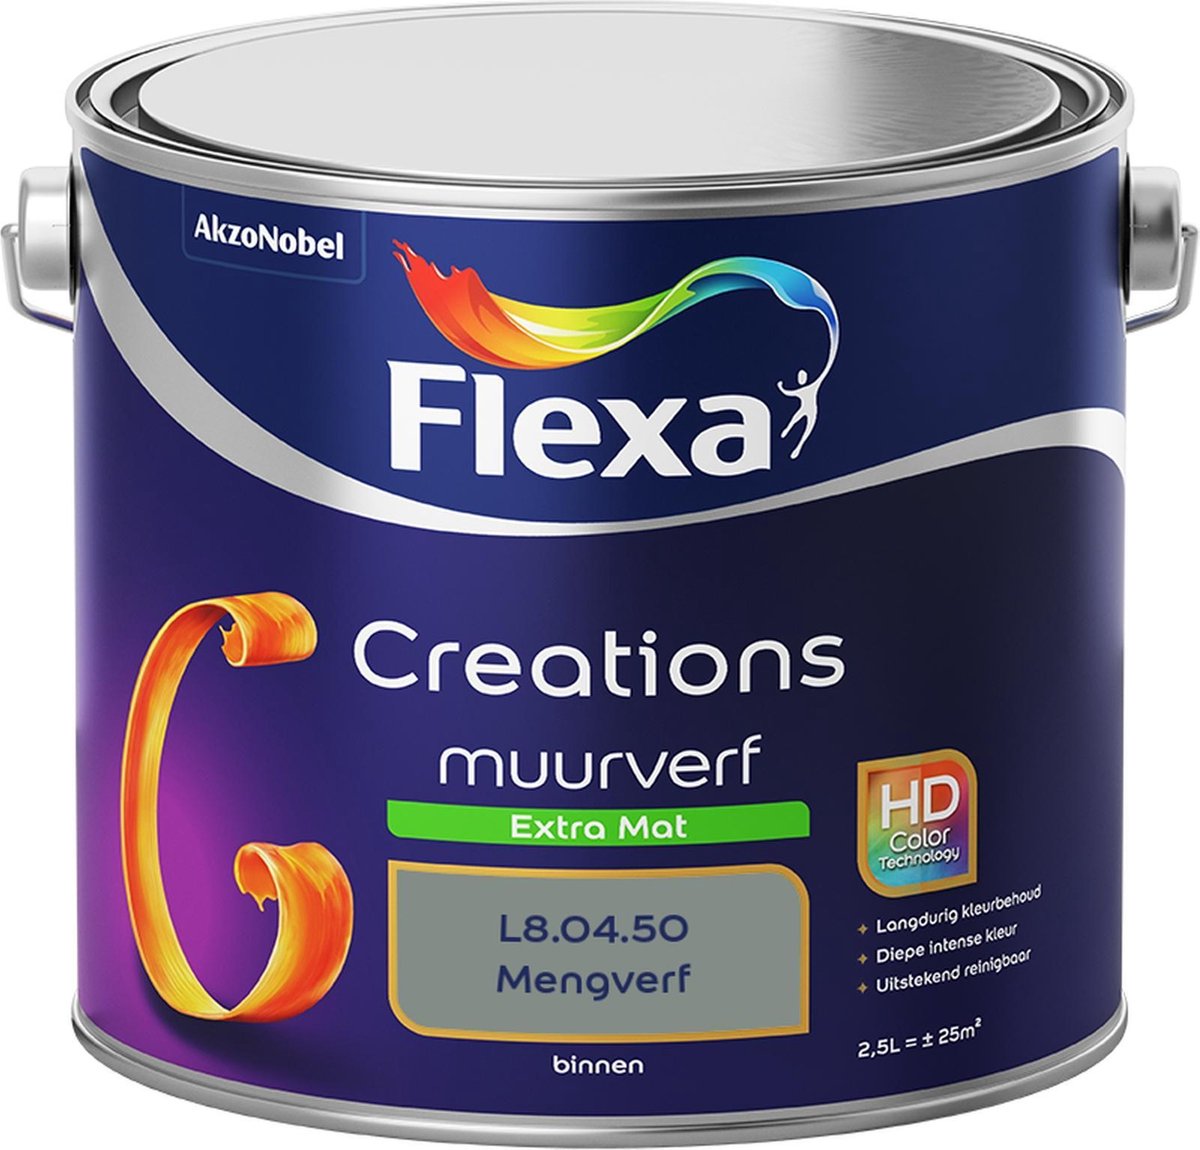 Flexa Creations Muurverf - Extra Mat - Colorfutures 2019 - L8.04.50 - 2,5 liter